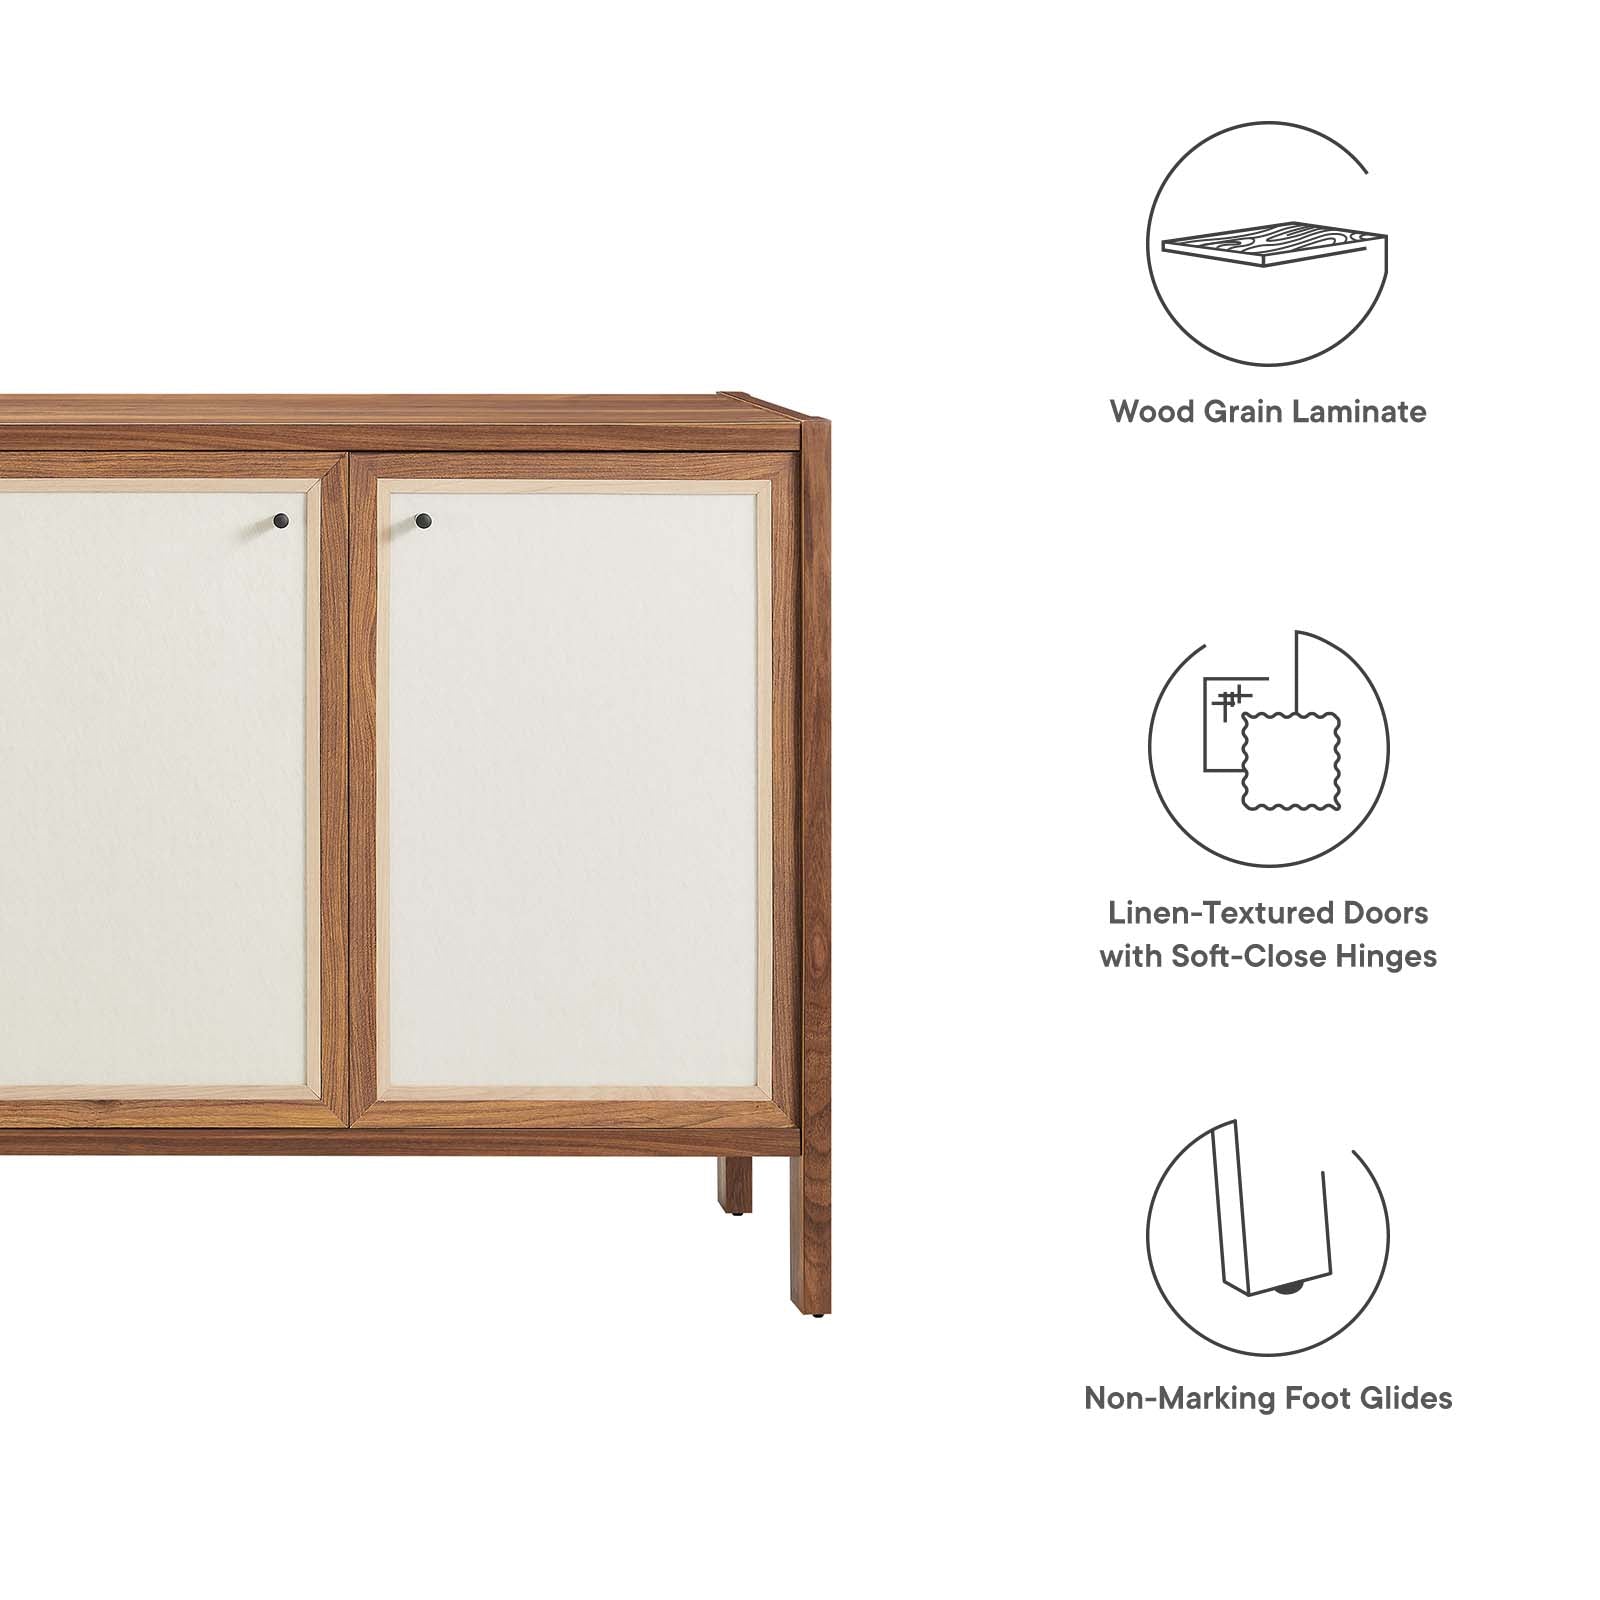 Capri 65" Wood Grain Sideboard Storage Cabinet - East Shore Modern Home Furnishings